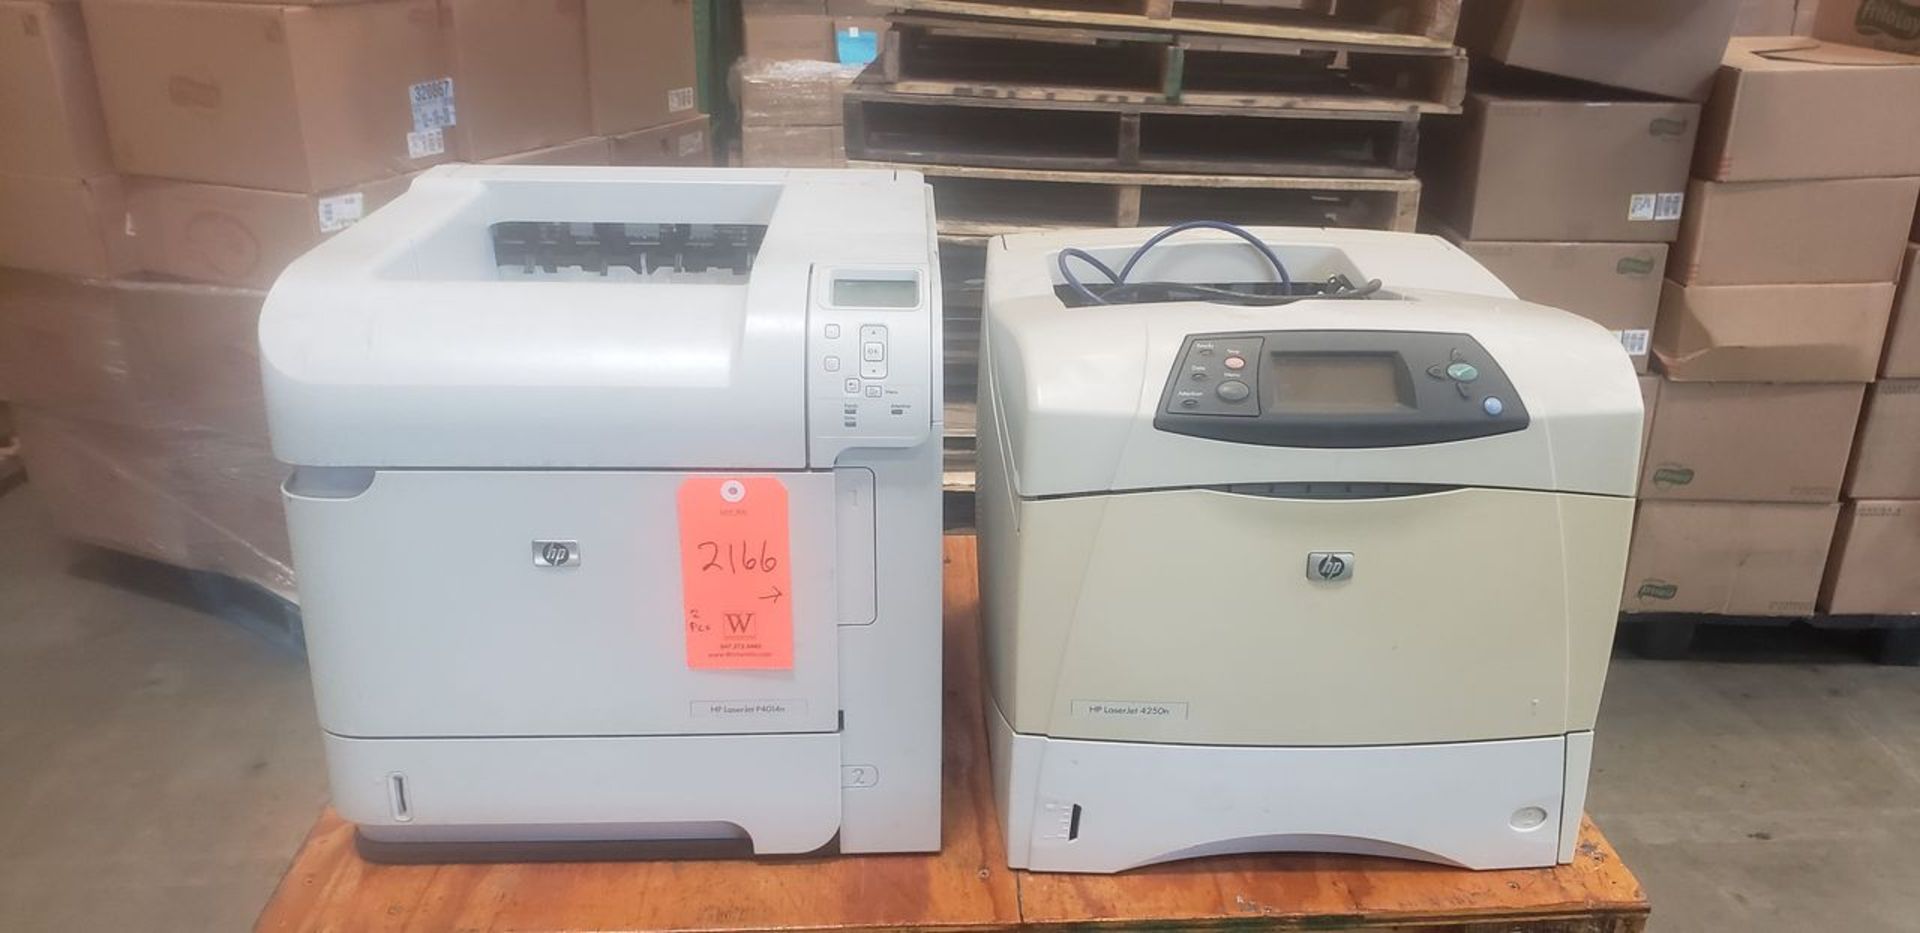 Lot - (2) Hewlett Packard Printers; (1) Laserjet P4014N, and (1) Laserjet 4250N - (Located In: